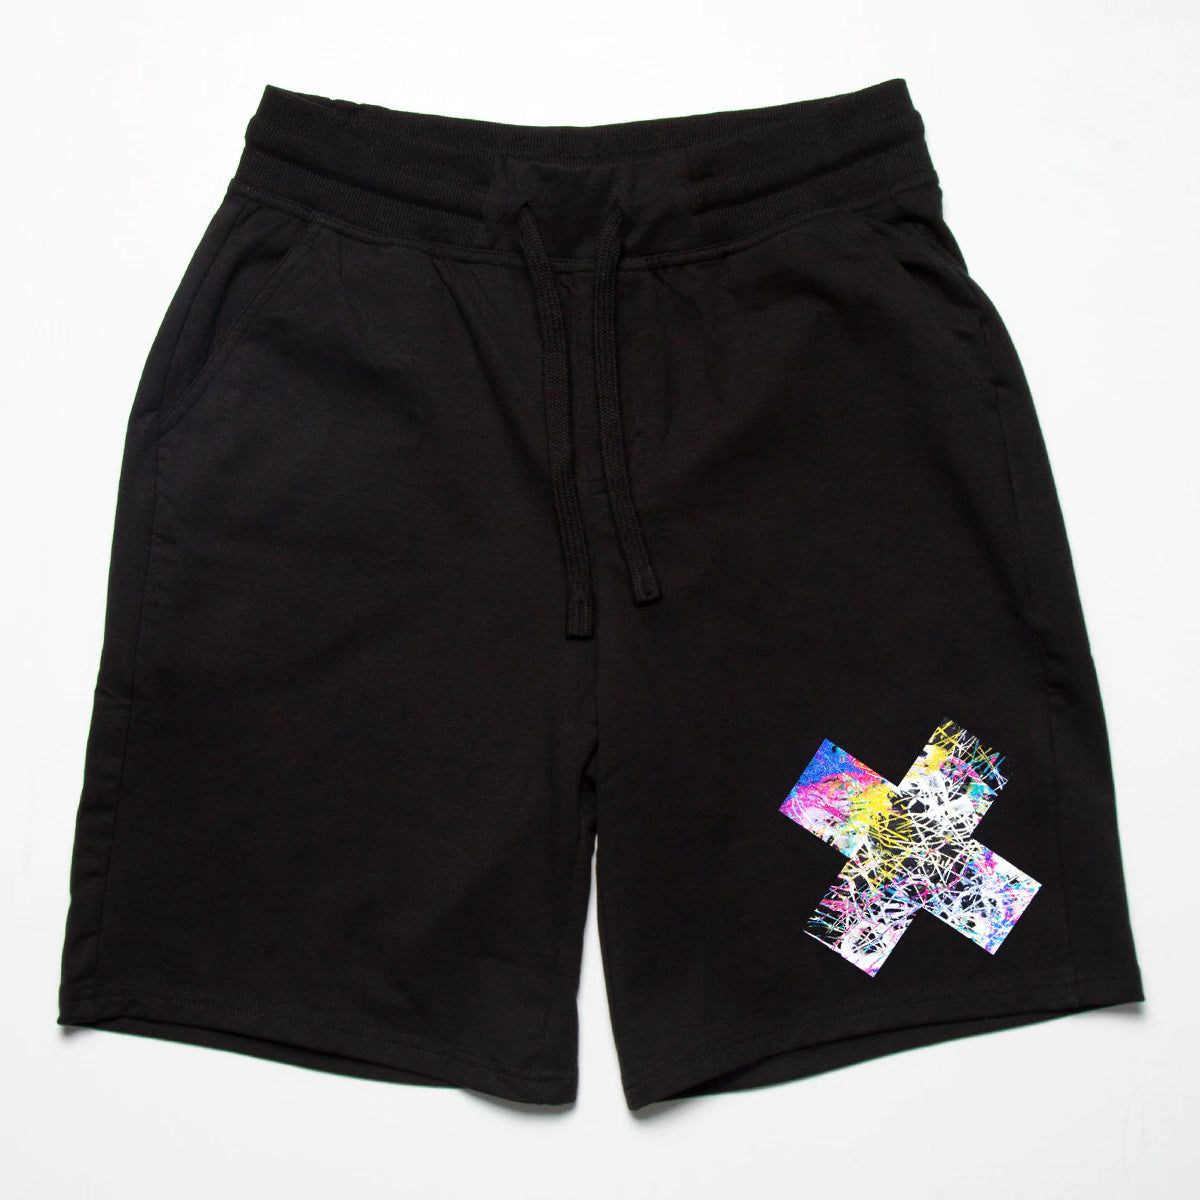 Stringer X Imprint - Jersey Shorts - Black